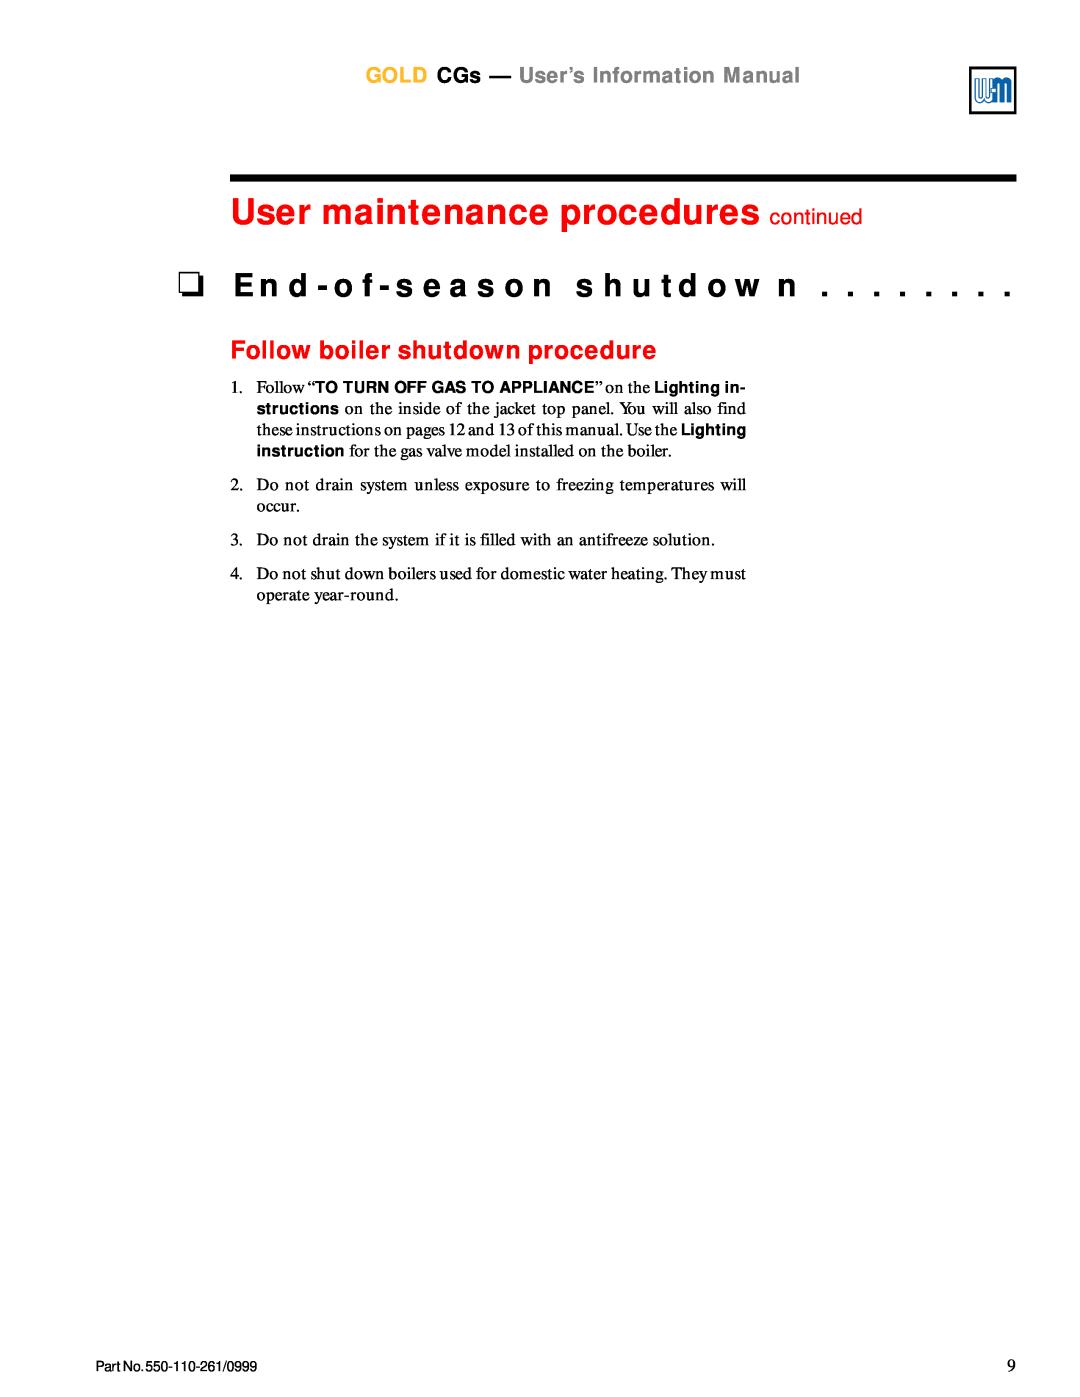 Weil-McLain GOLD CGs manual End-of-seasonshutdown, Follow boiler shutdown procedure, User maintenance procedures continued 